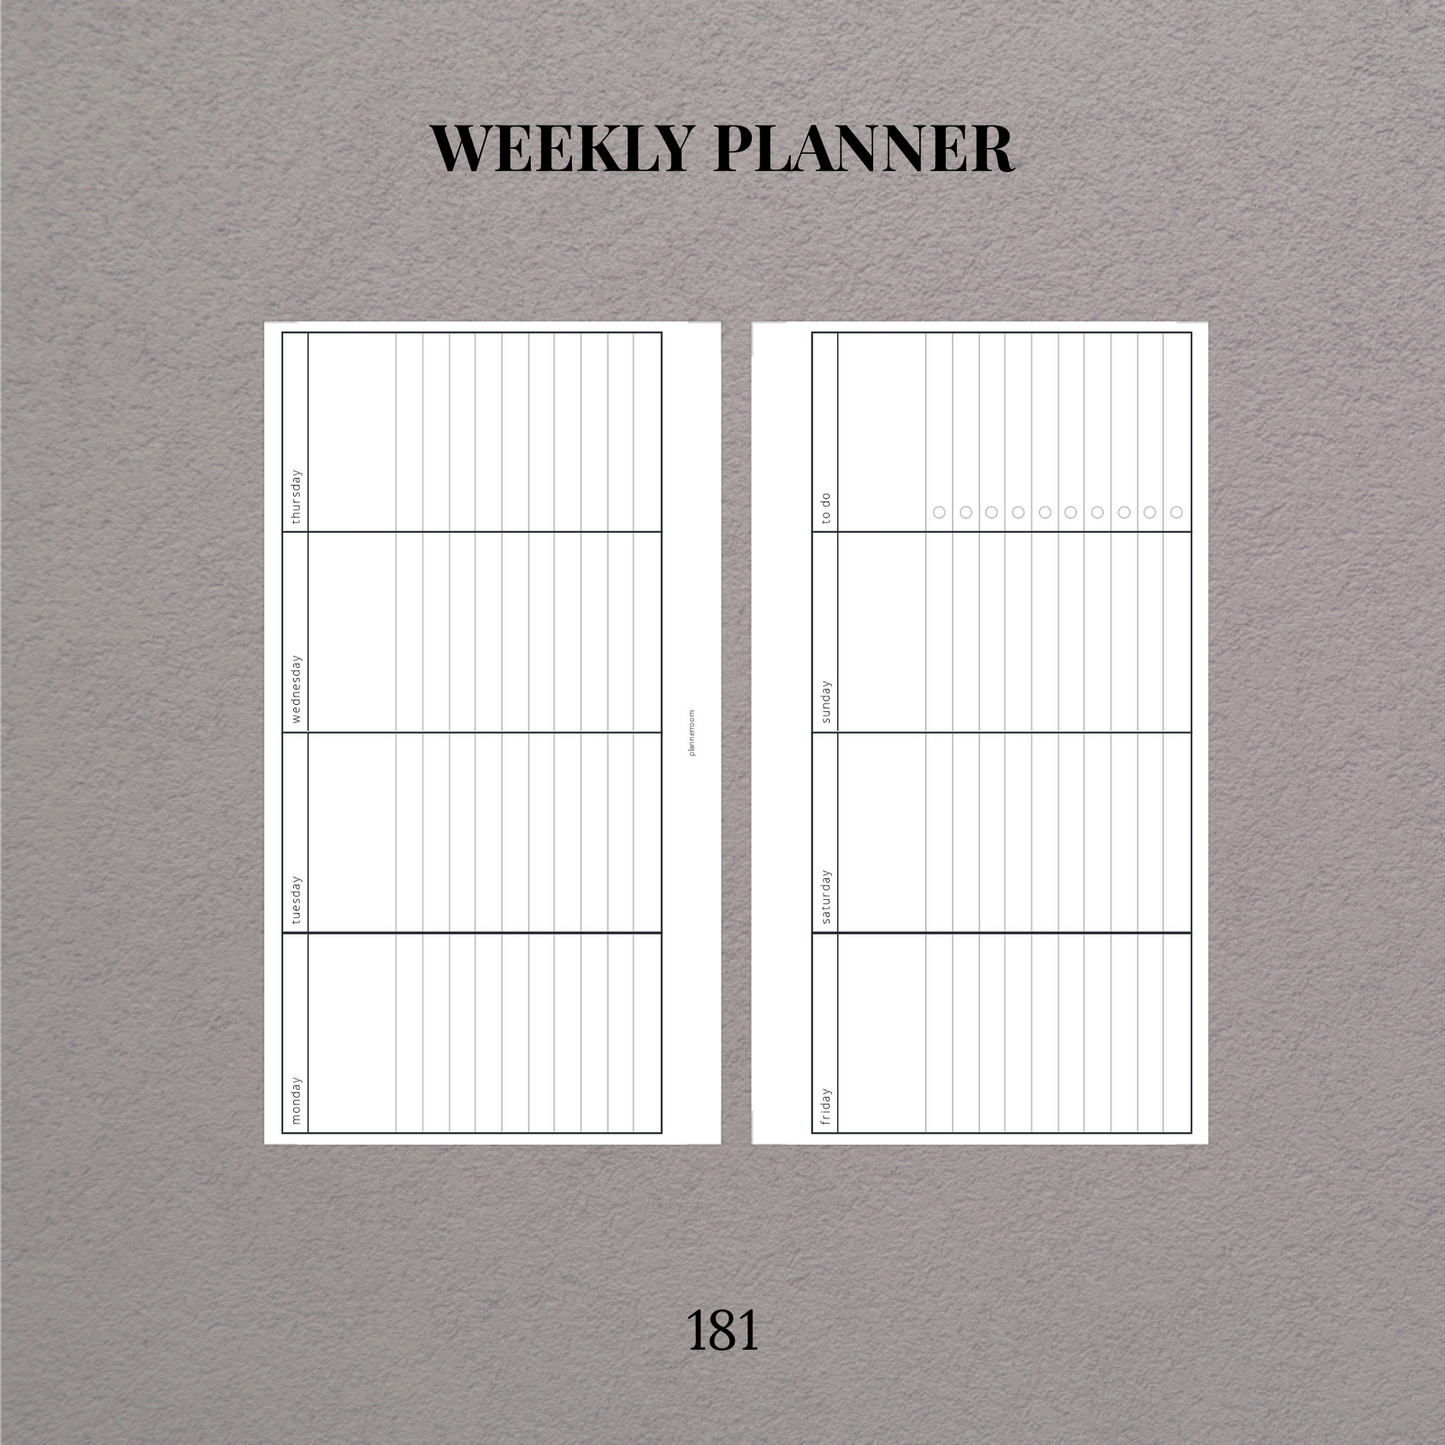 Weekly planner - 181